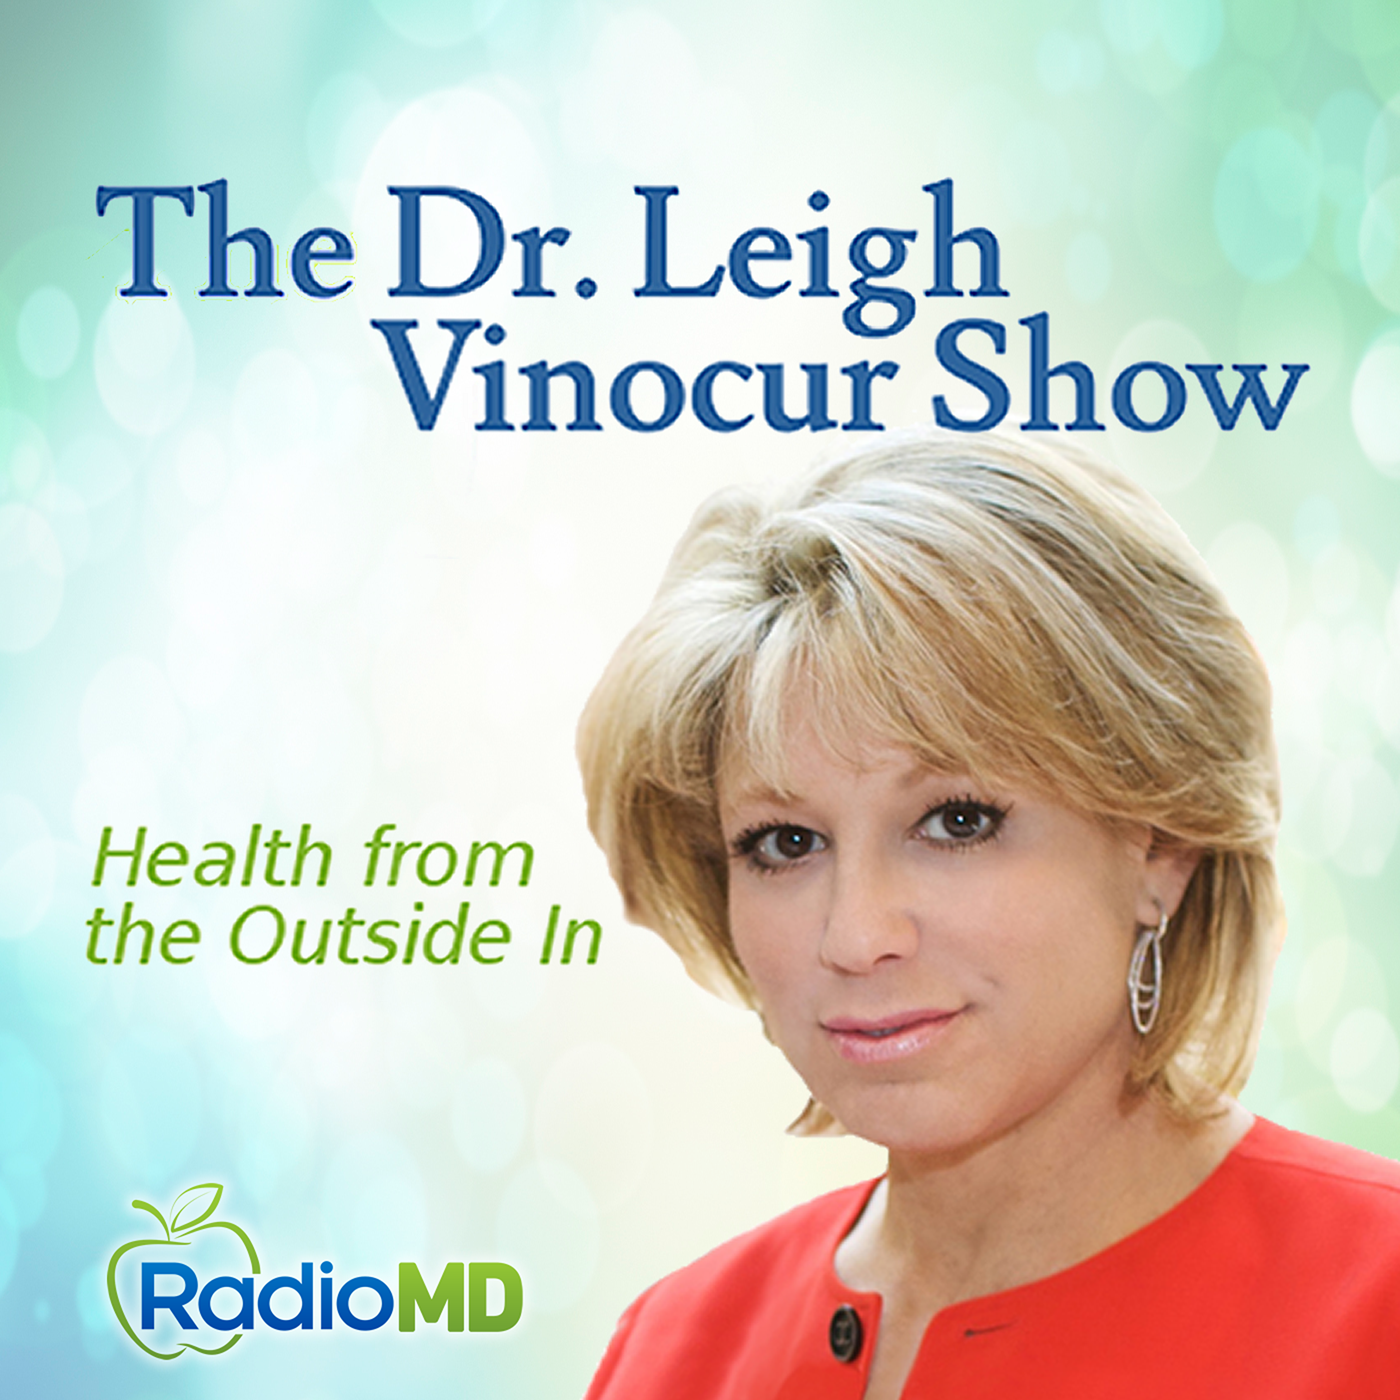 The Dr. Leigh Vinocur Show